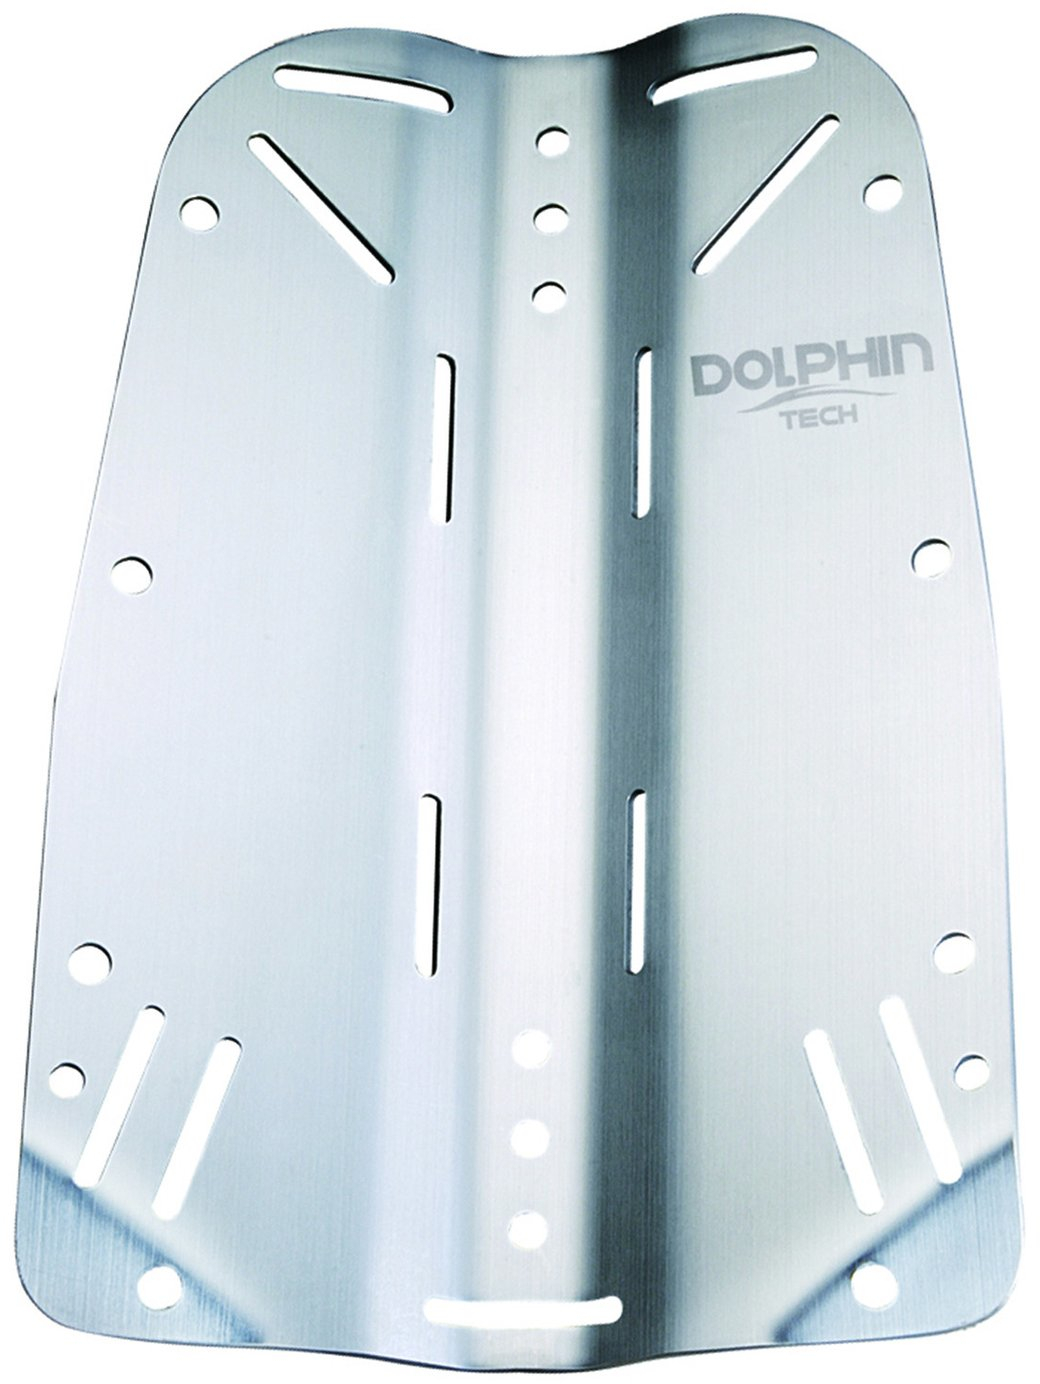 Dolphin Tech Aluminum Backplate